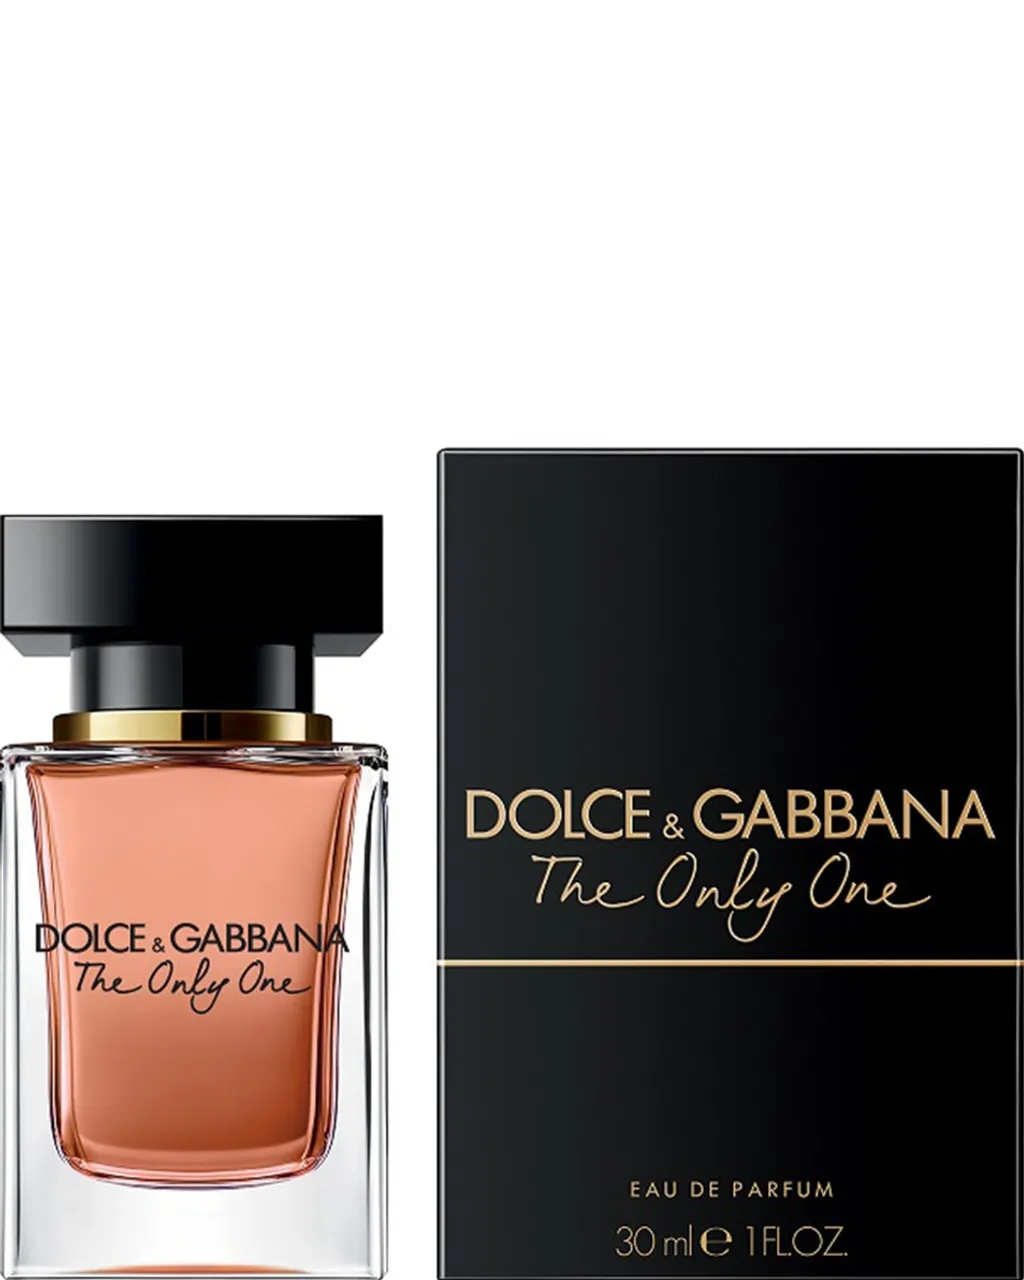 Dolce & Gabbana The Only One EAU DE PARFUM 30 ML